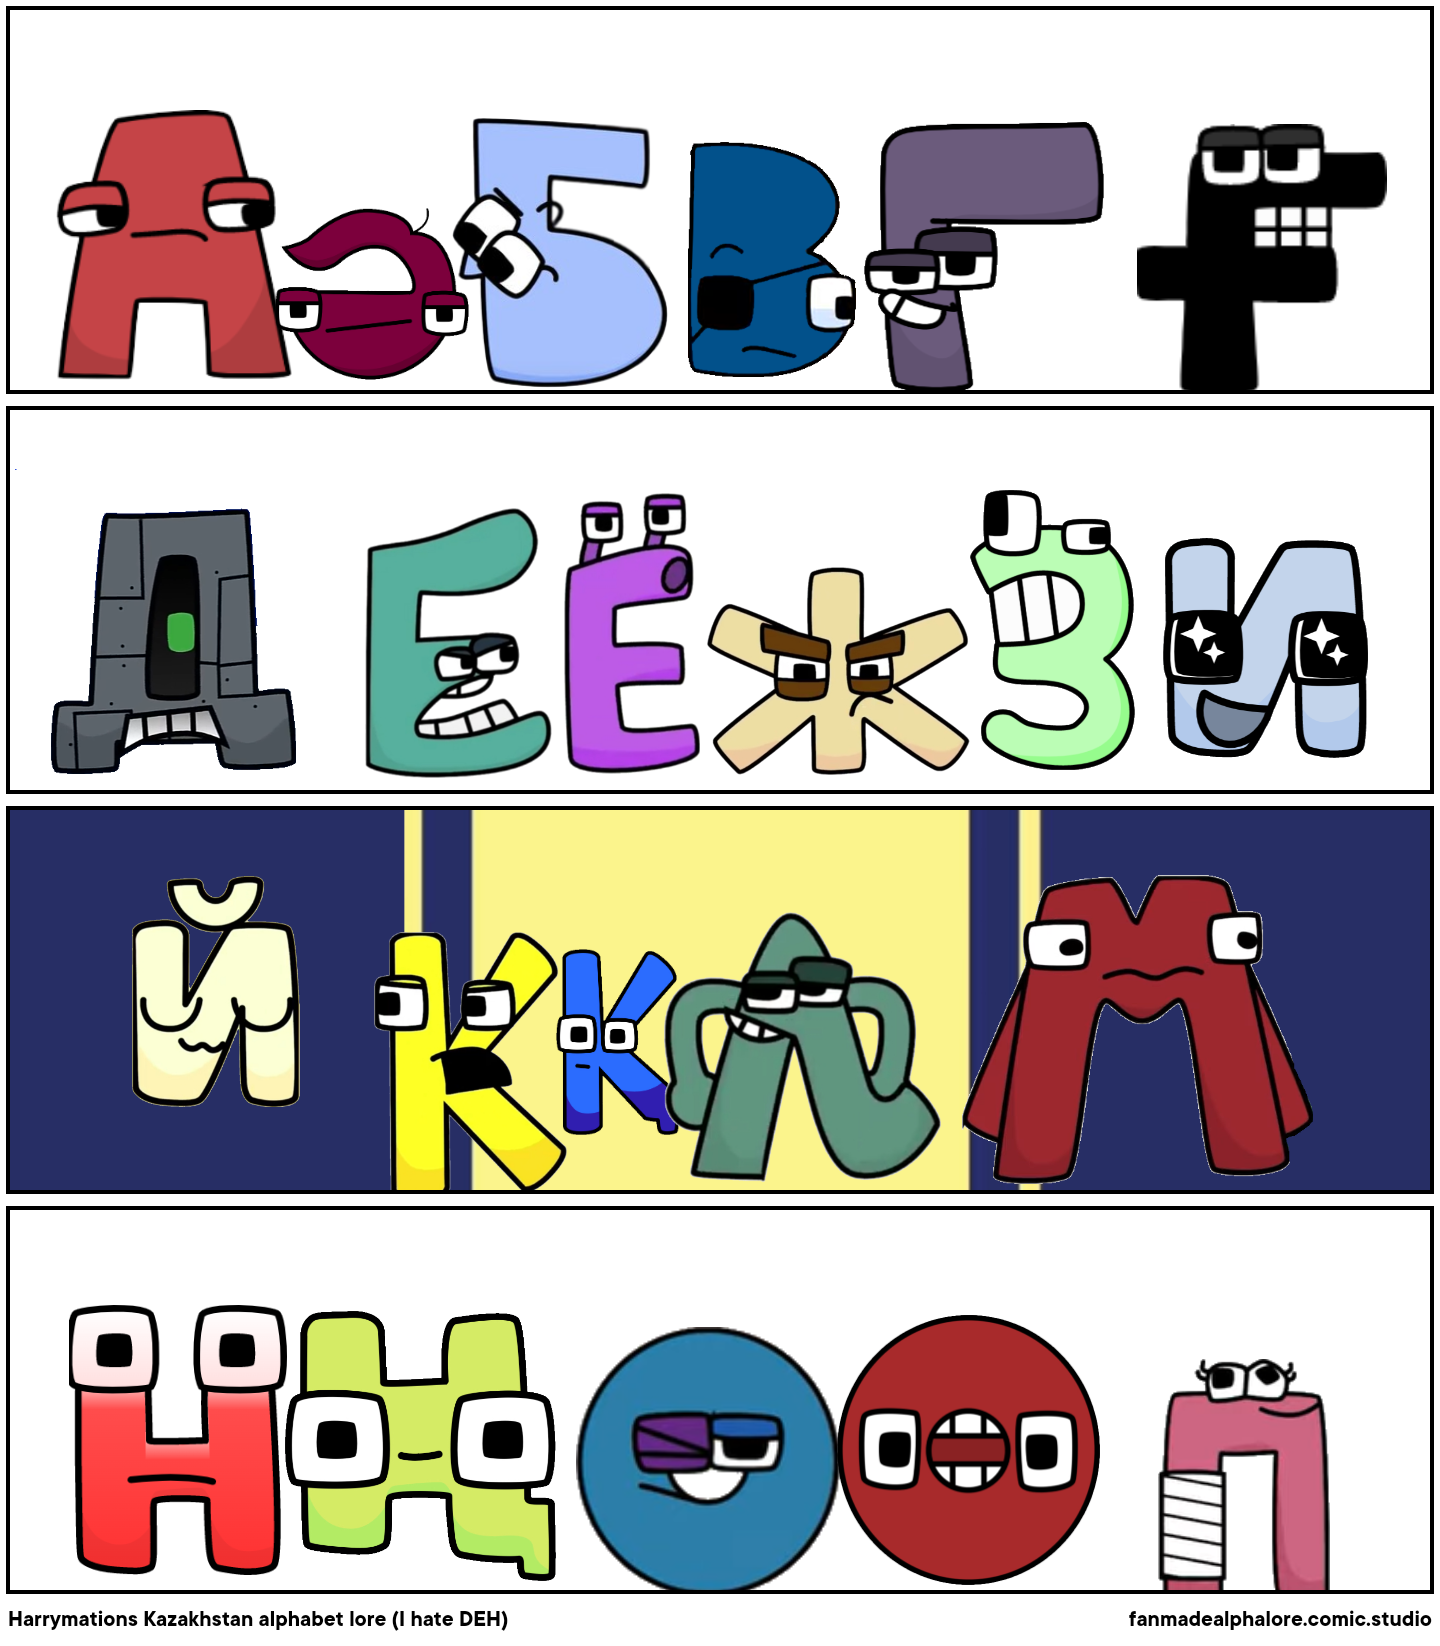 Kazakh alphabet lore - Comic Studio